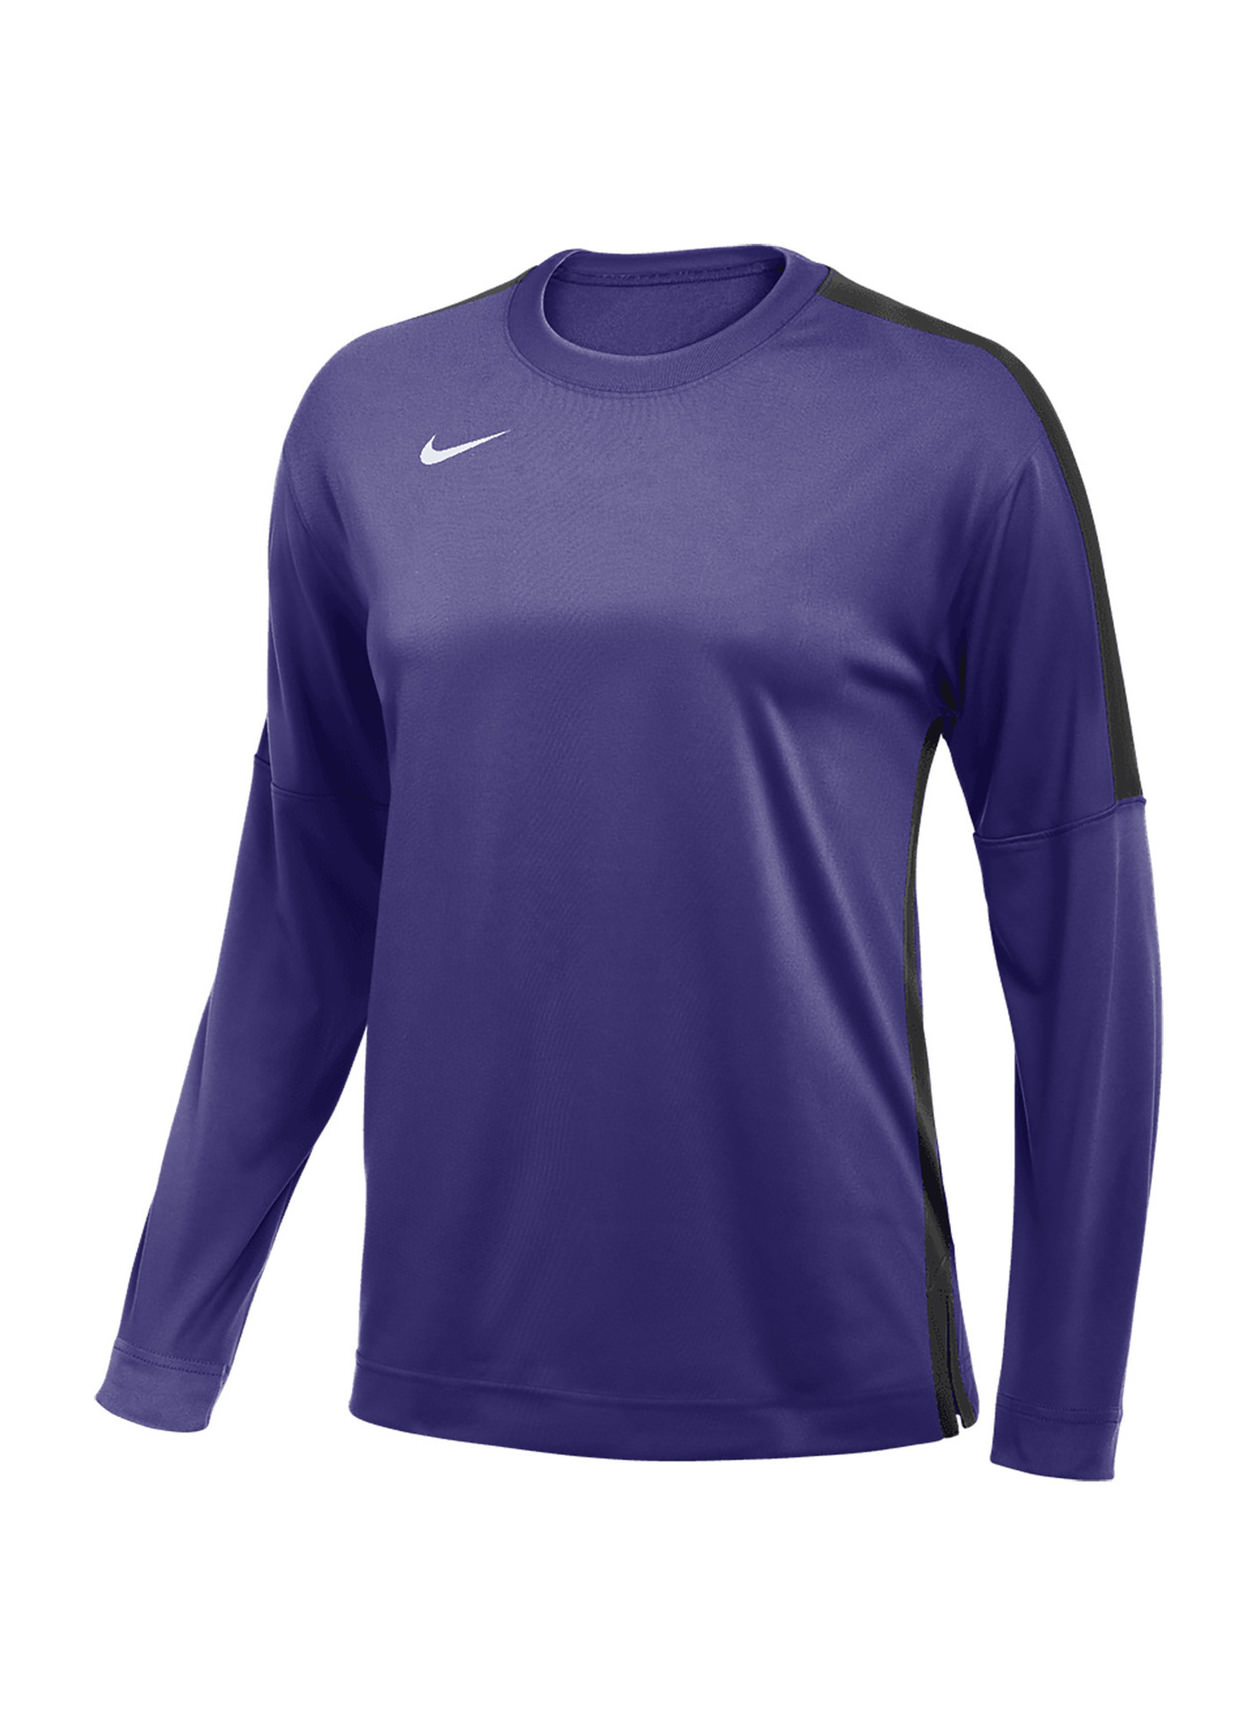 Nike Women's Team Purple / Team Black Shooting Long-Sleeve T-Shirt